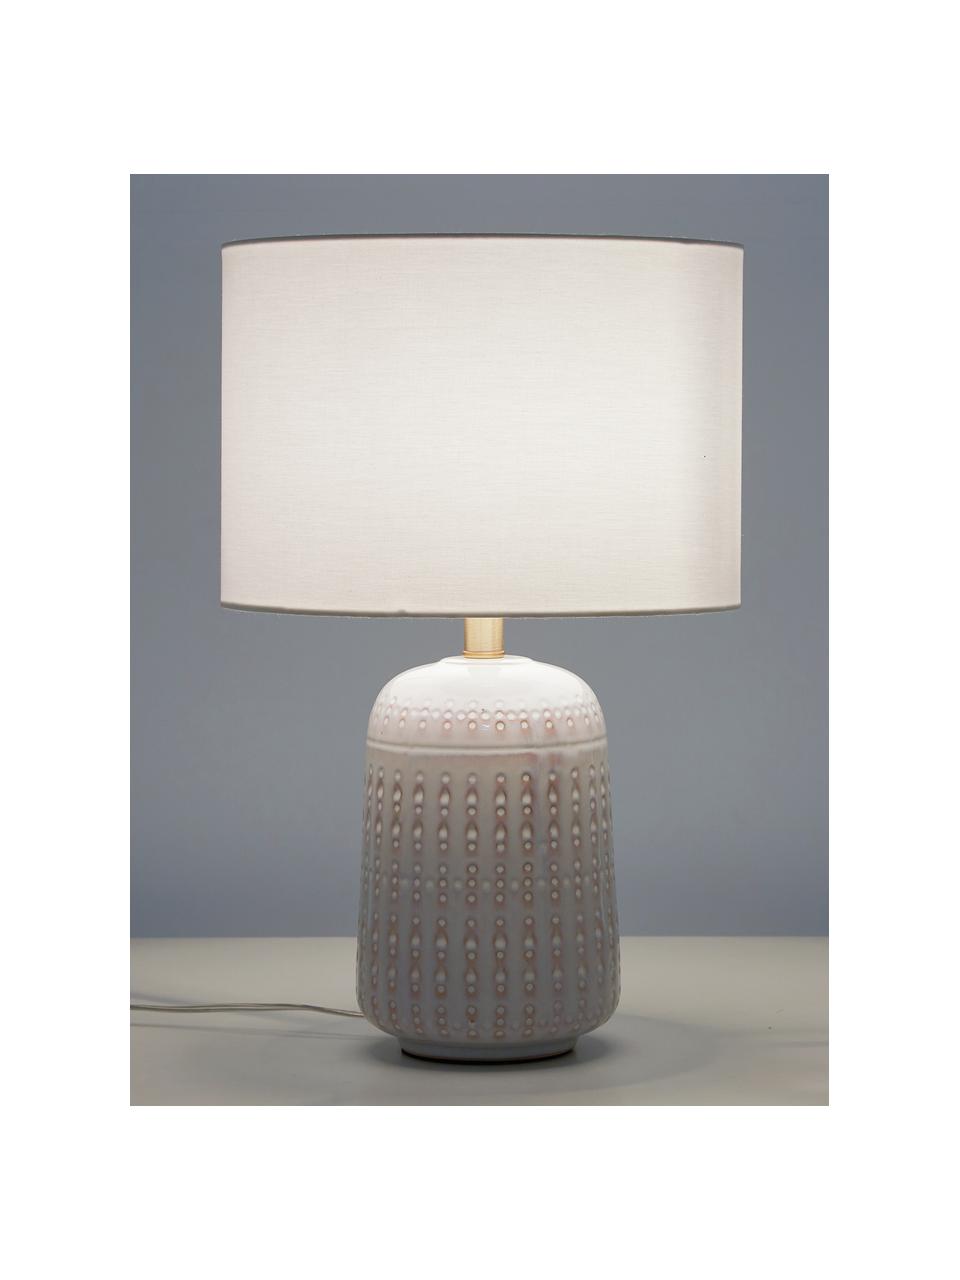 Große Keramik-Tischlampe Iva, Lampenschirm: Textil, Lampenfuß: Keramik, Lampenschirm: WeißLampenfuß: Cremeweiß, Messing, Ø 33 x H 53 cm